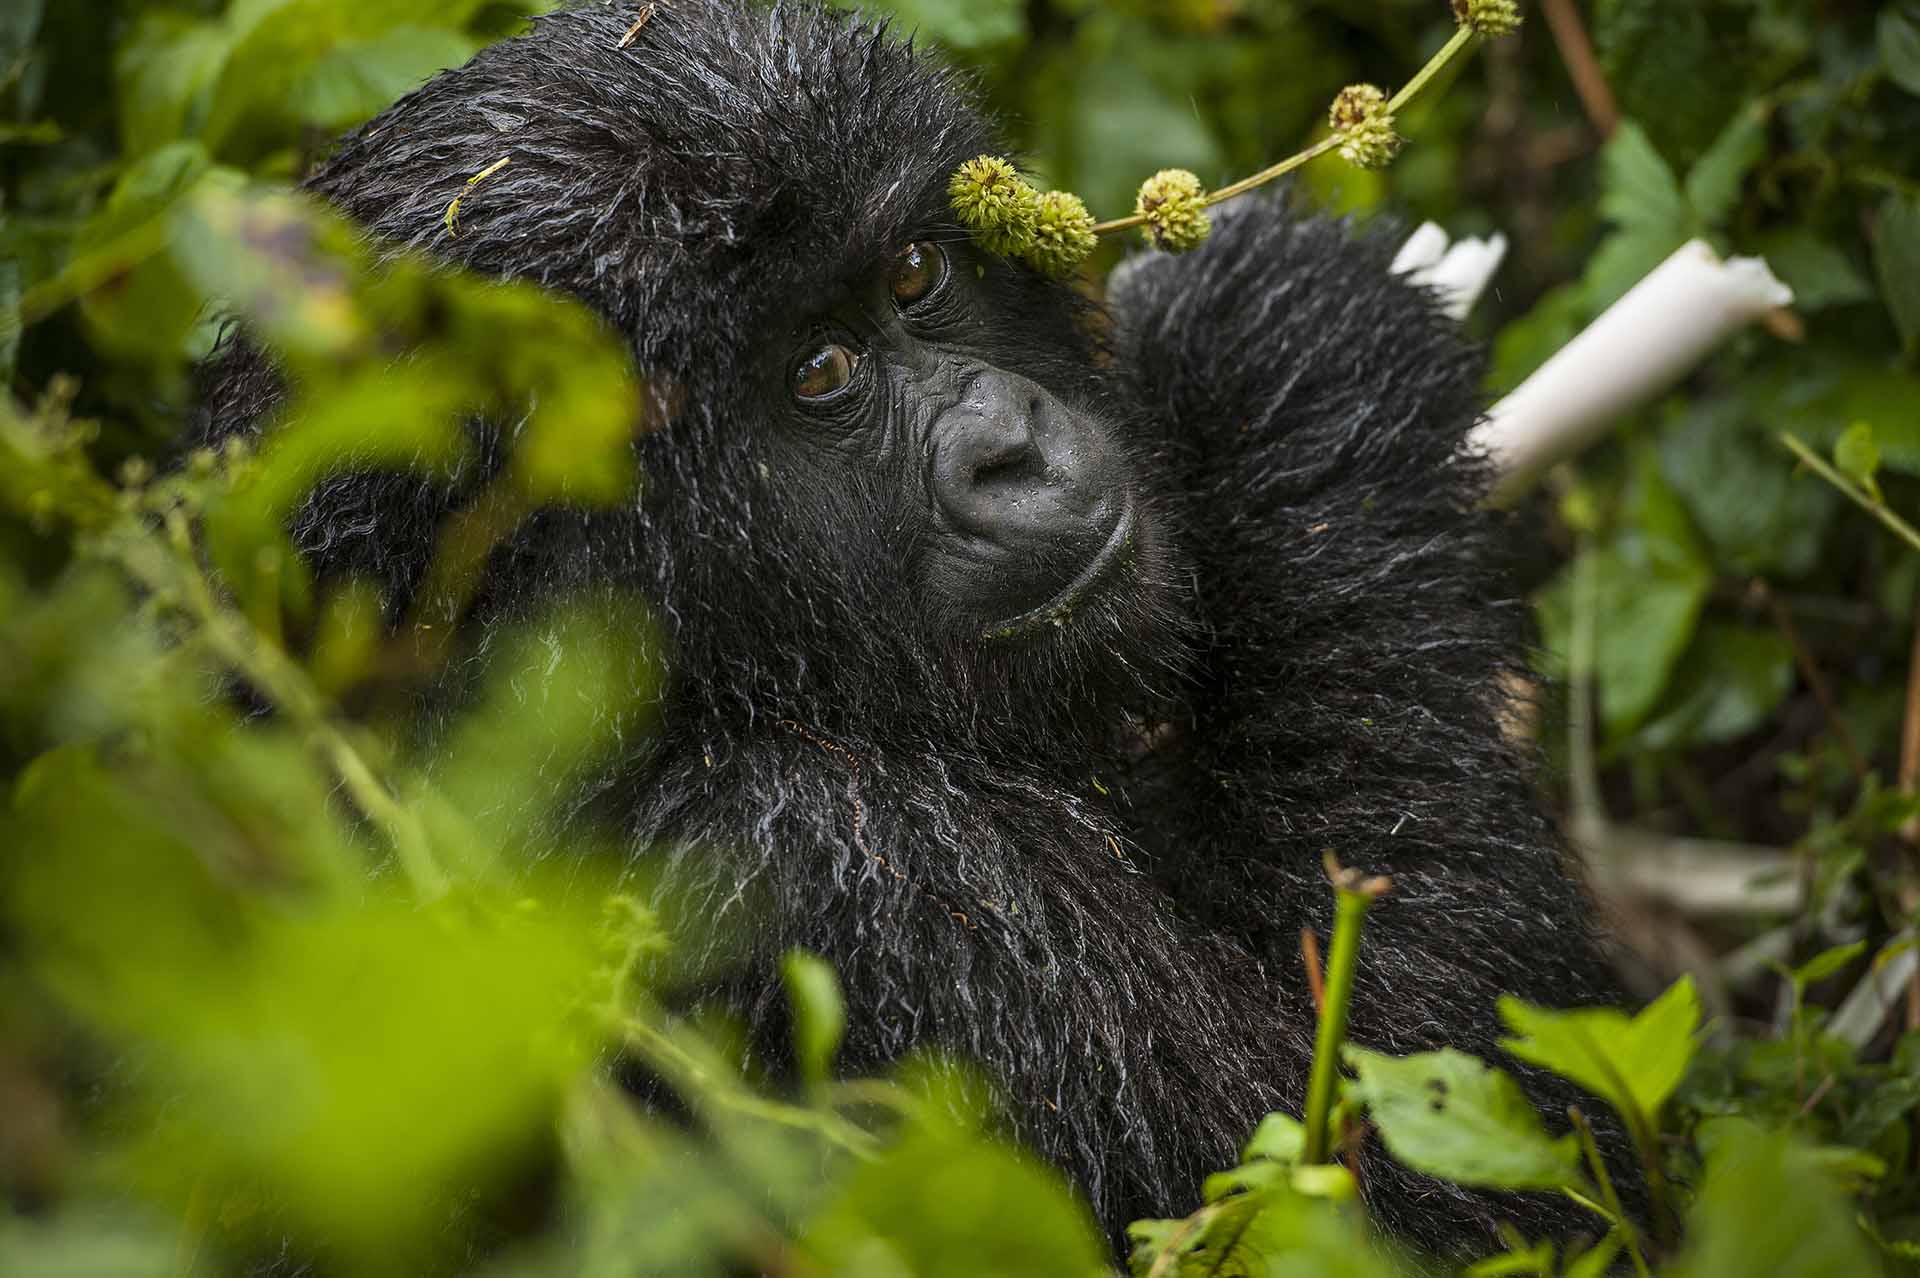 A close up image of a baby mountain gorilla's face